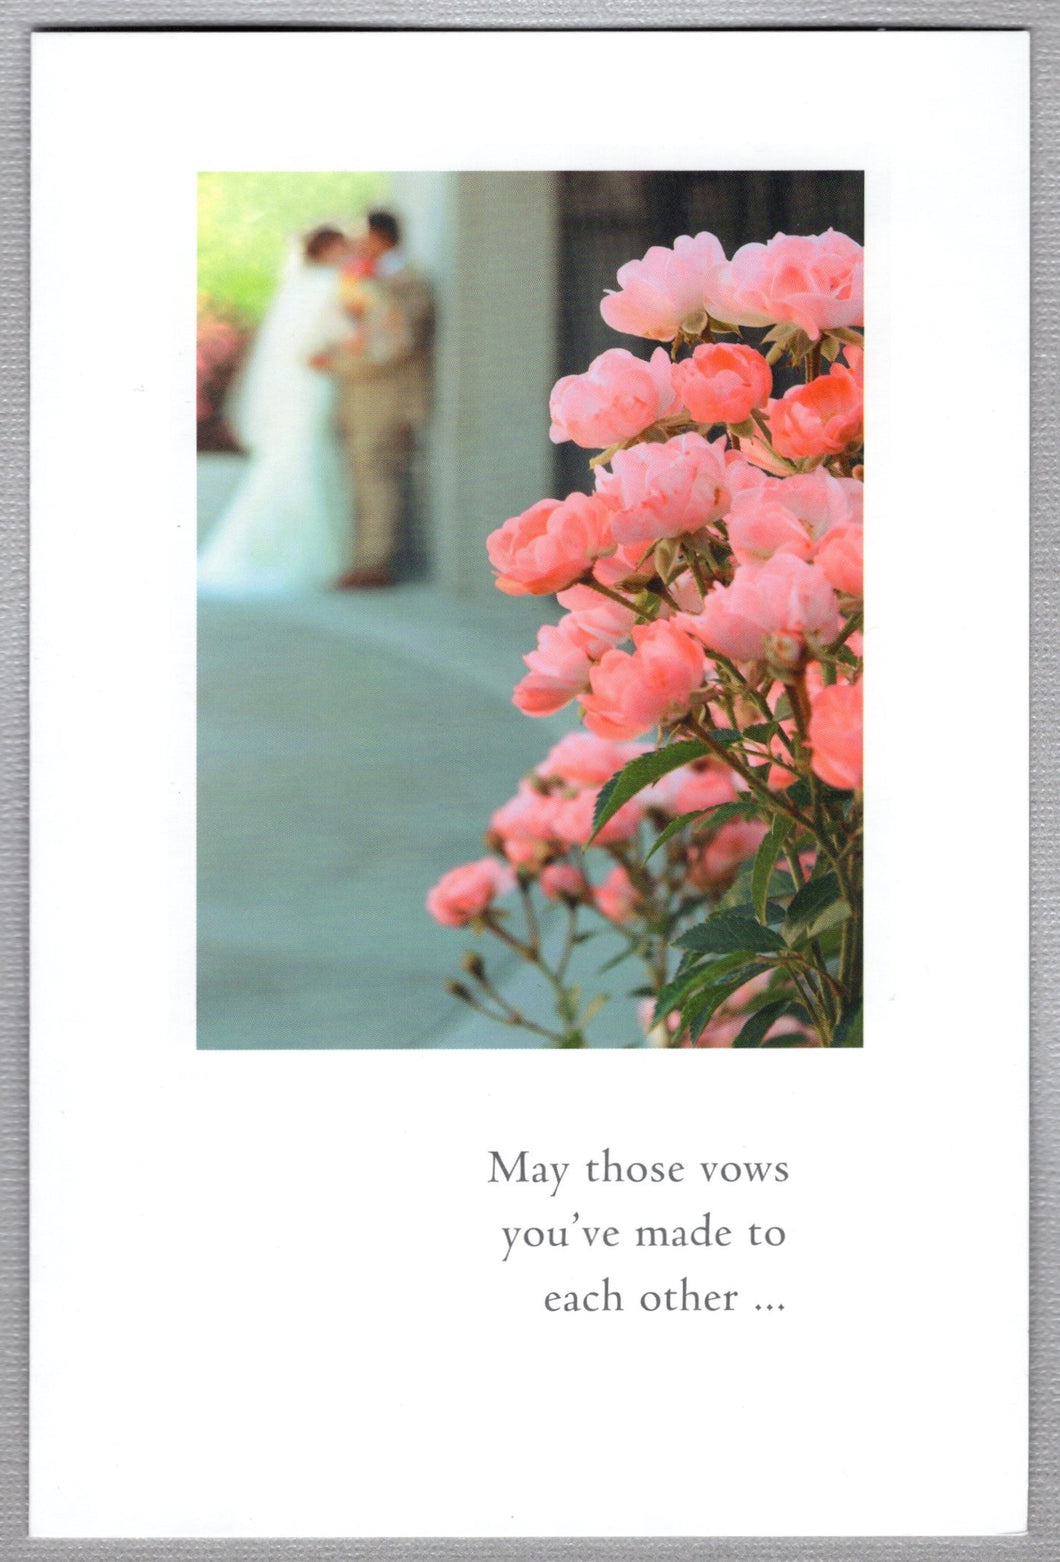 Greeting Card - Wedding - 